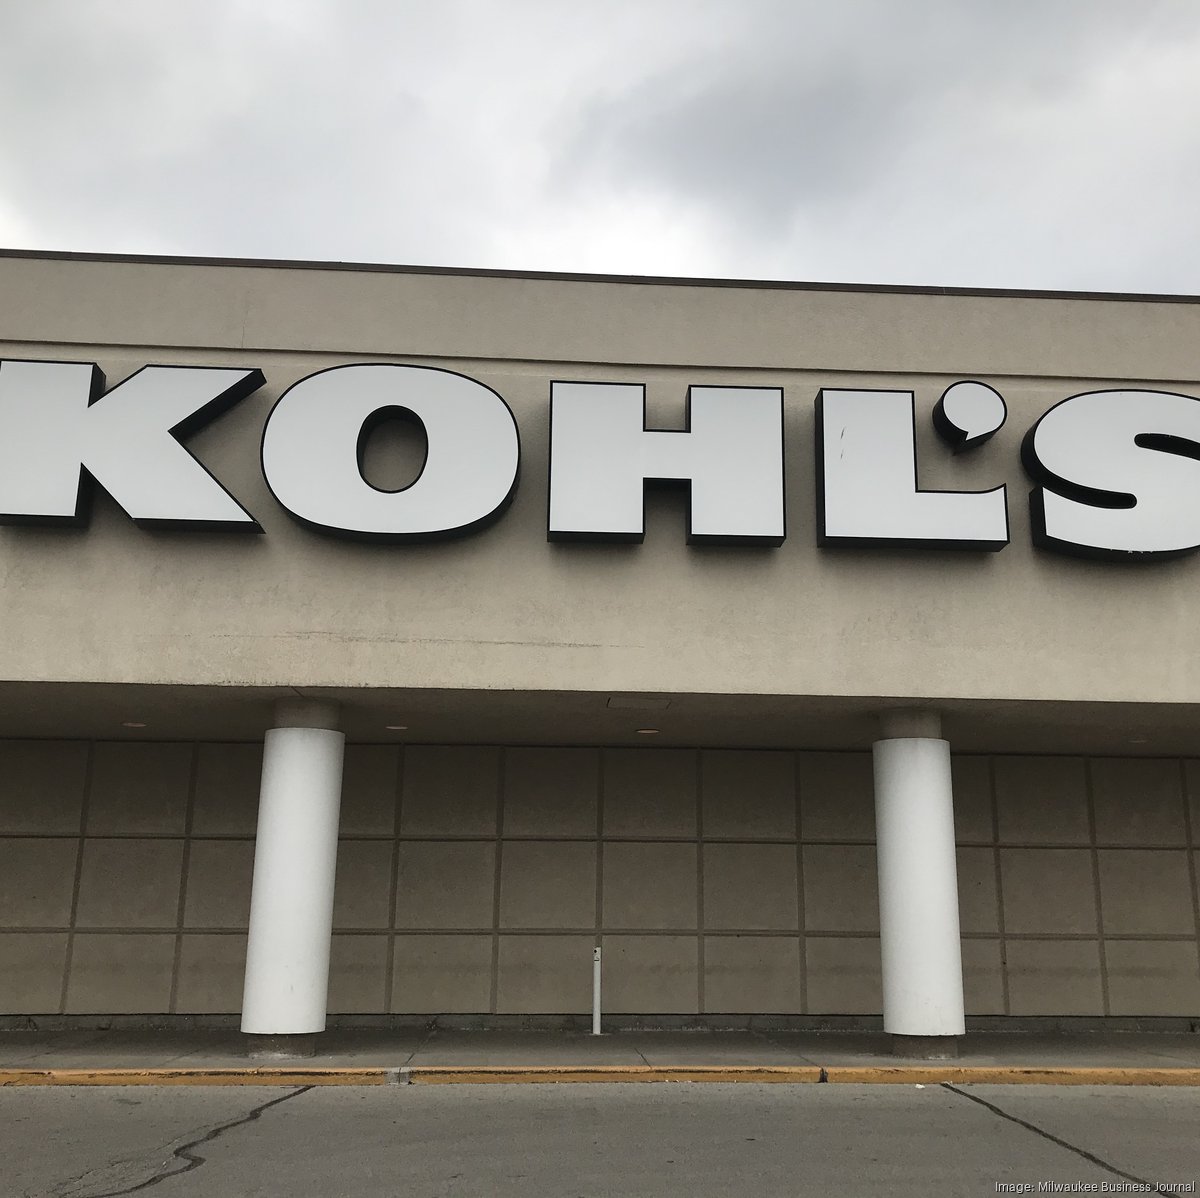 Kohl's Black Friday Deals: Best 2023 Savings Live